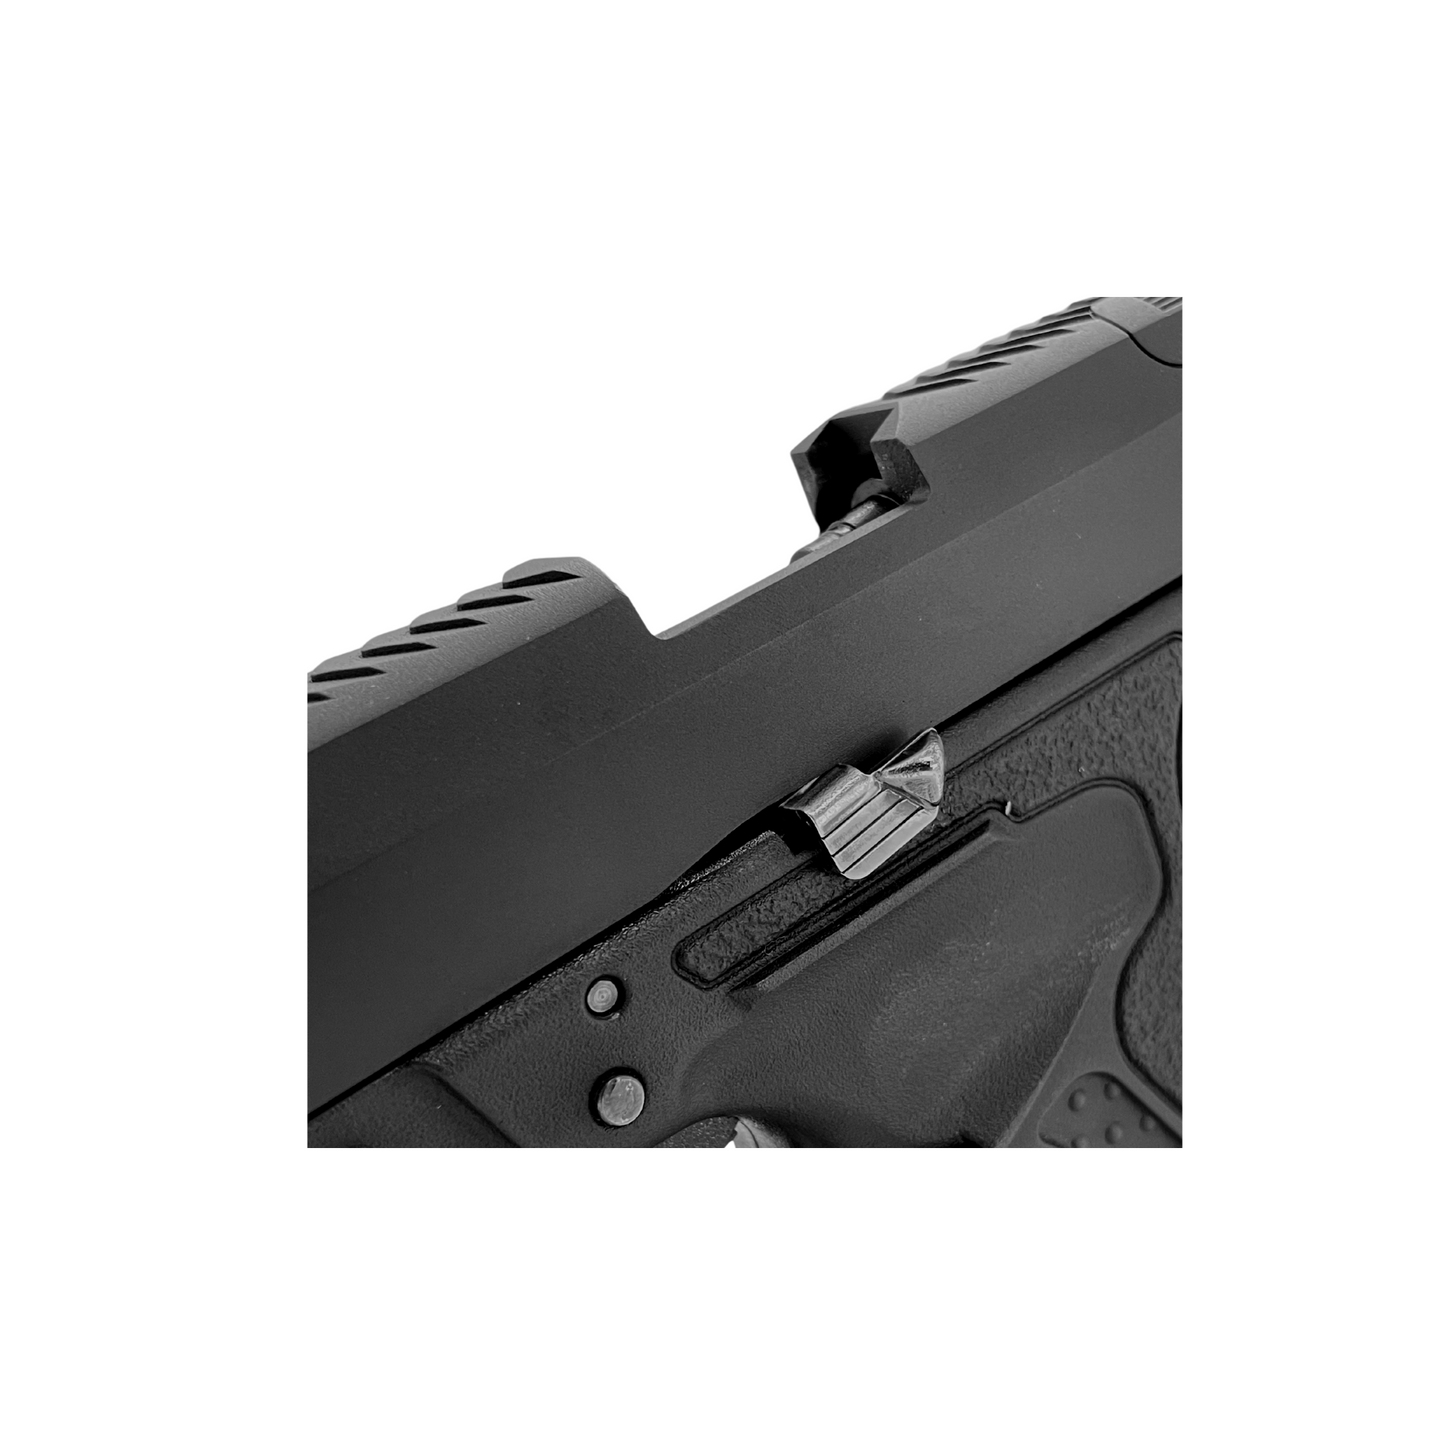 Polished WE Tech GP1799 Metal Gas Blowback Pistol - Gel Blaster